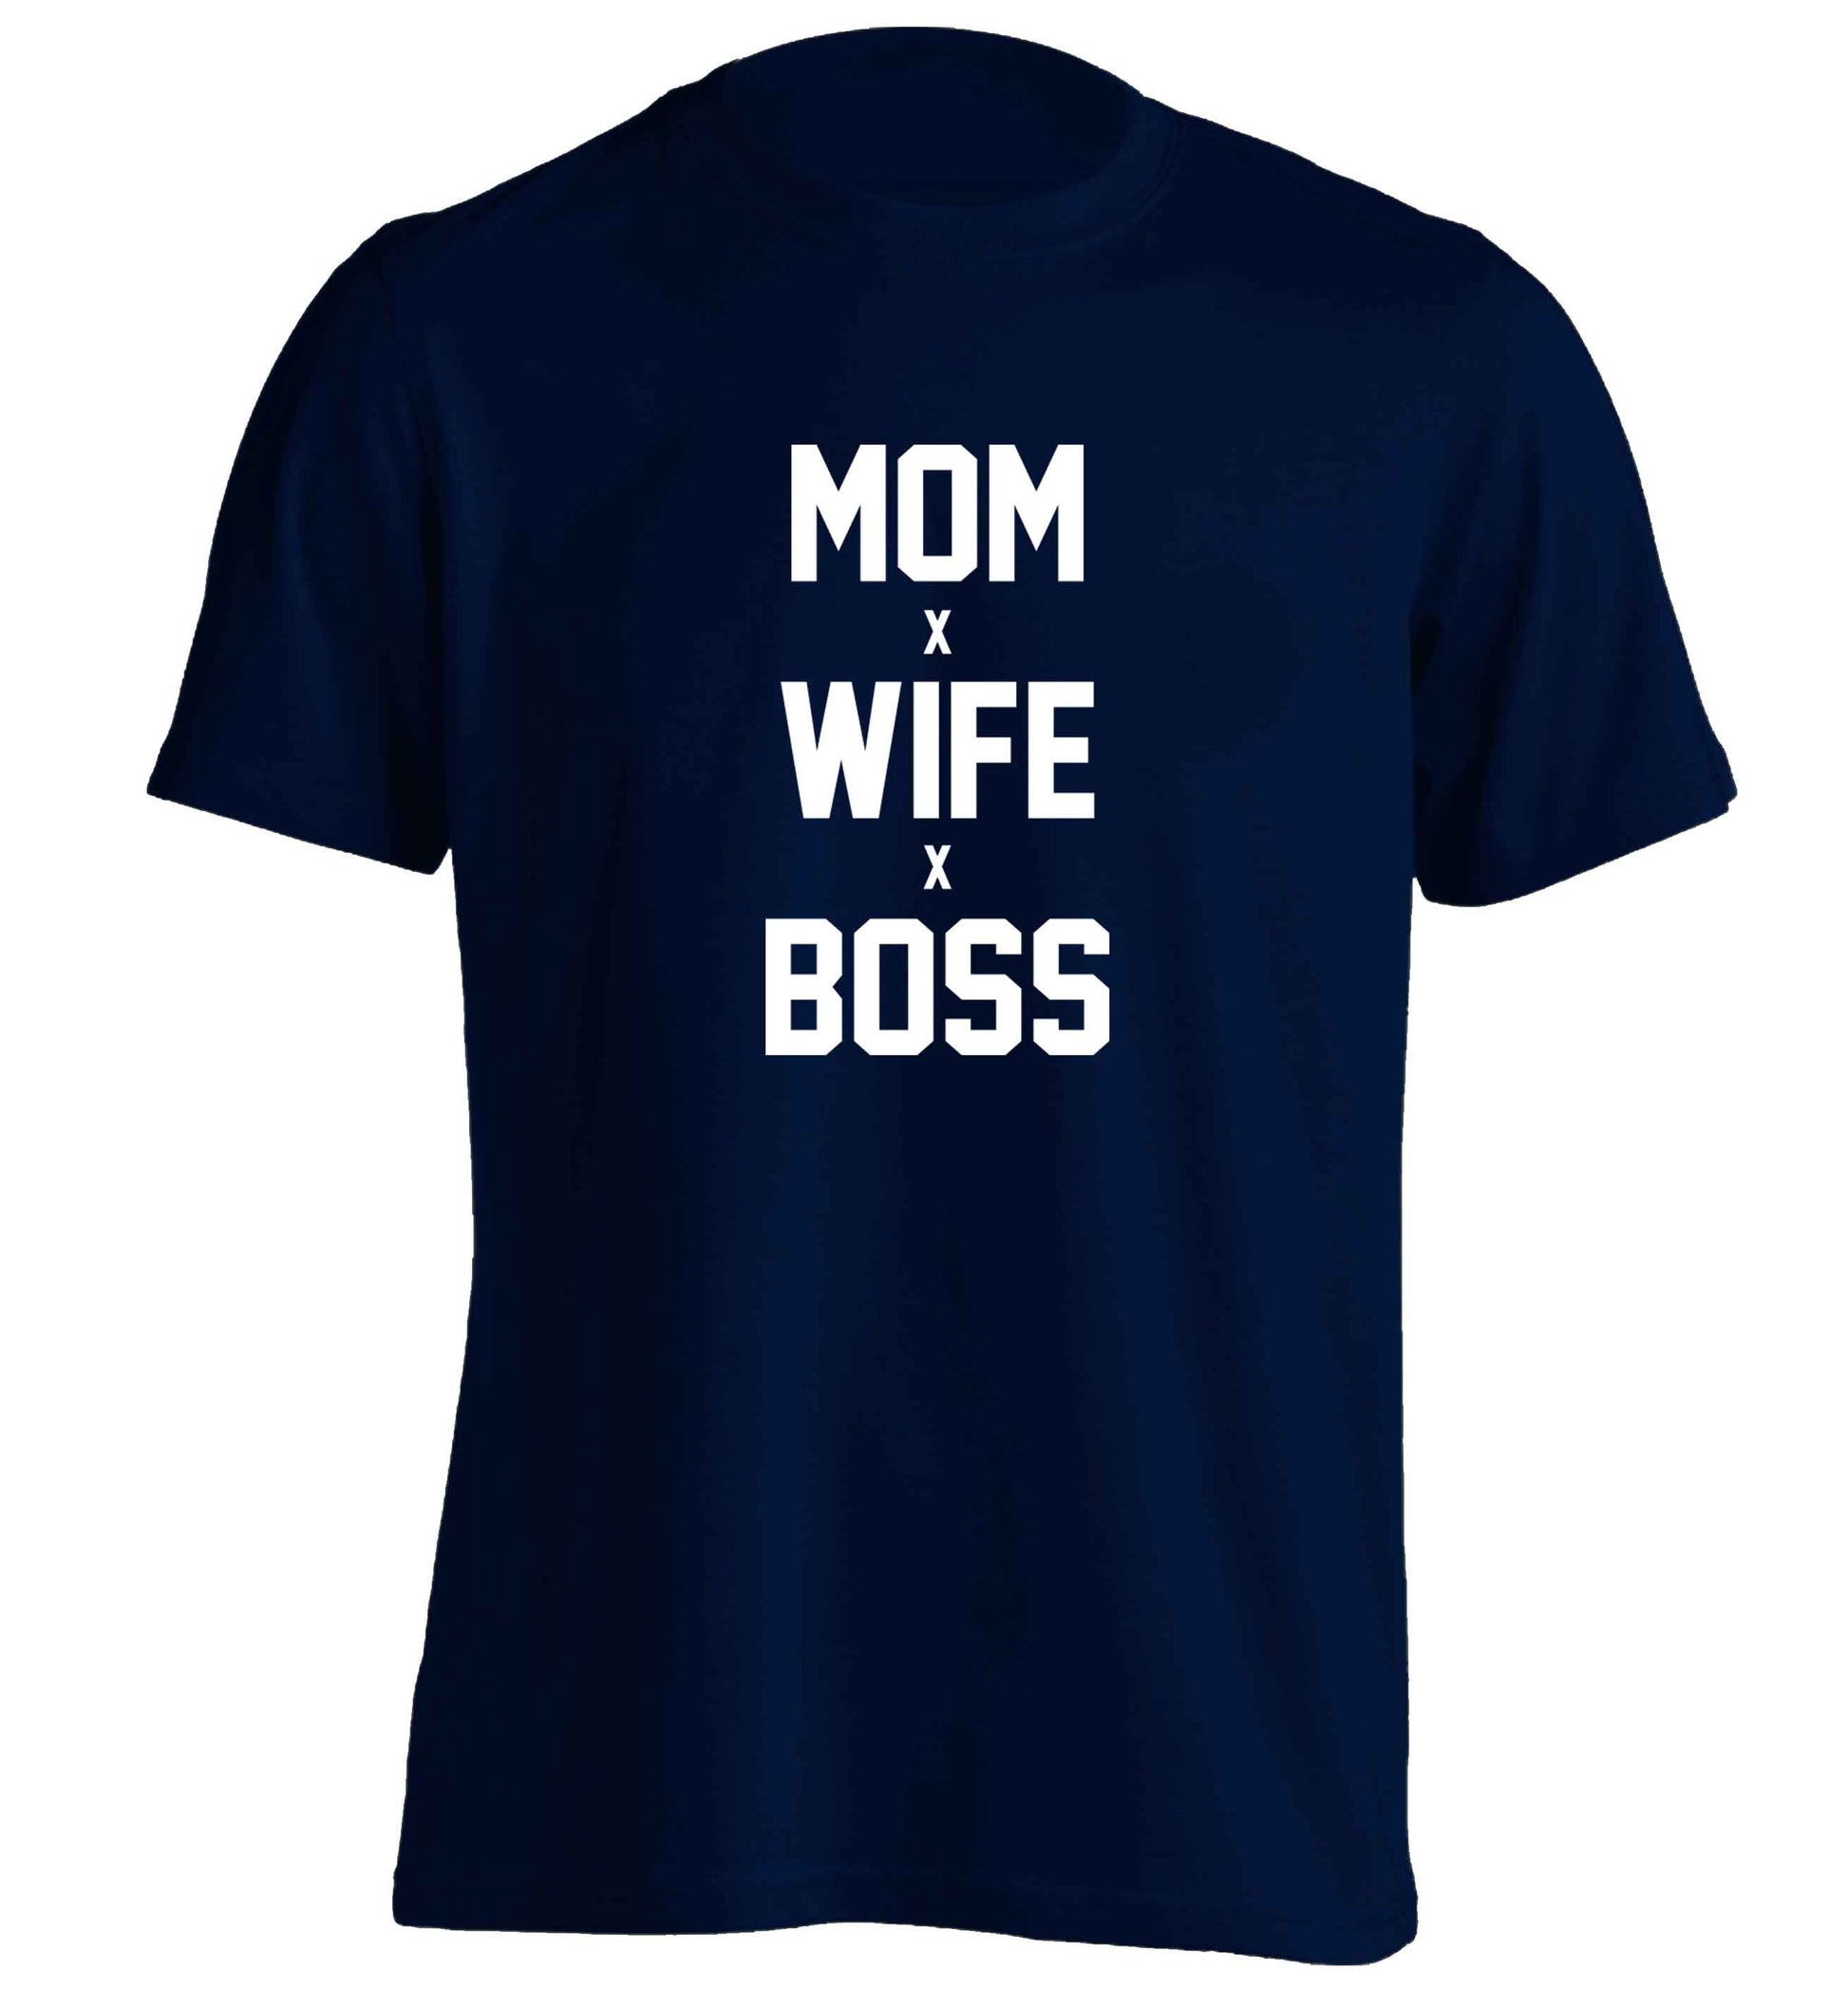 Mum wife boss adults unisex navy Tshirt 2XL